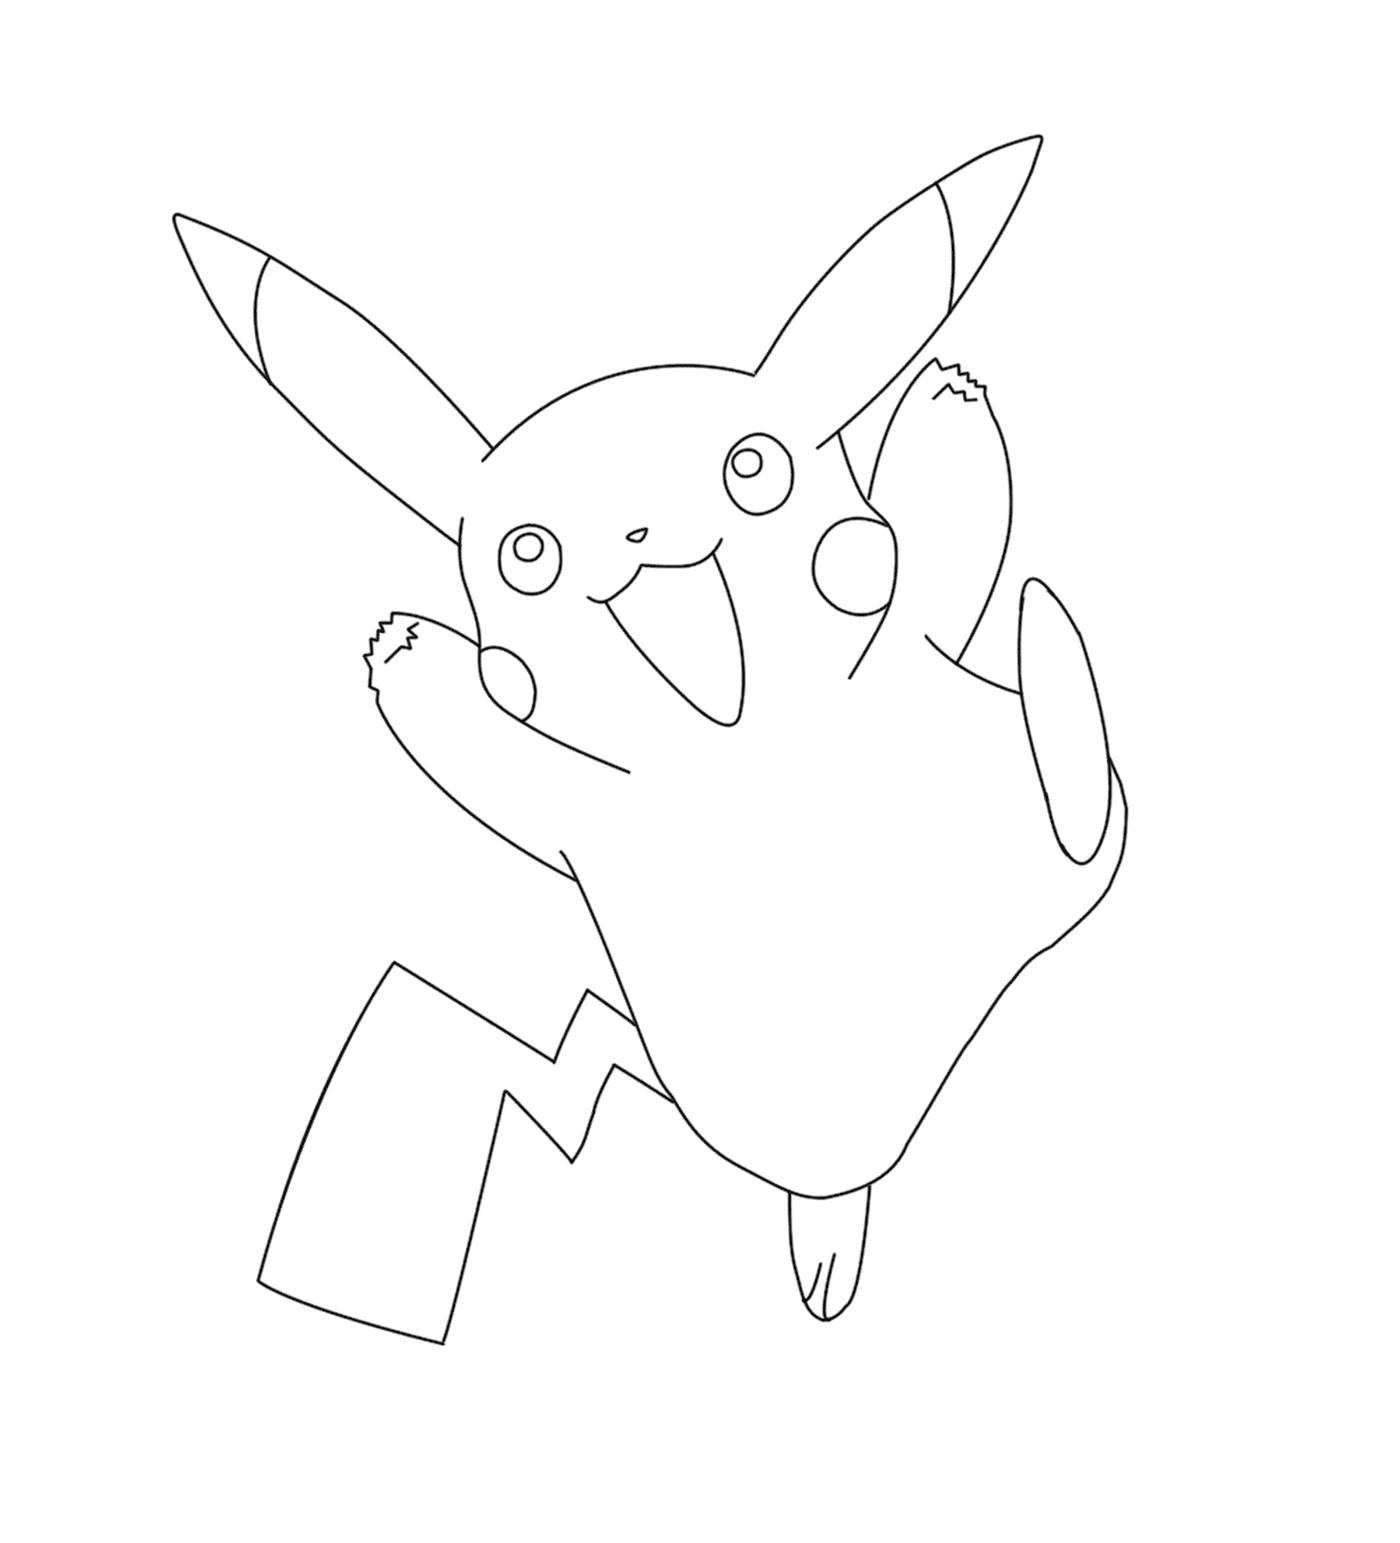  Pikachu in the game Pokémon Go 